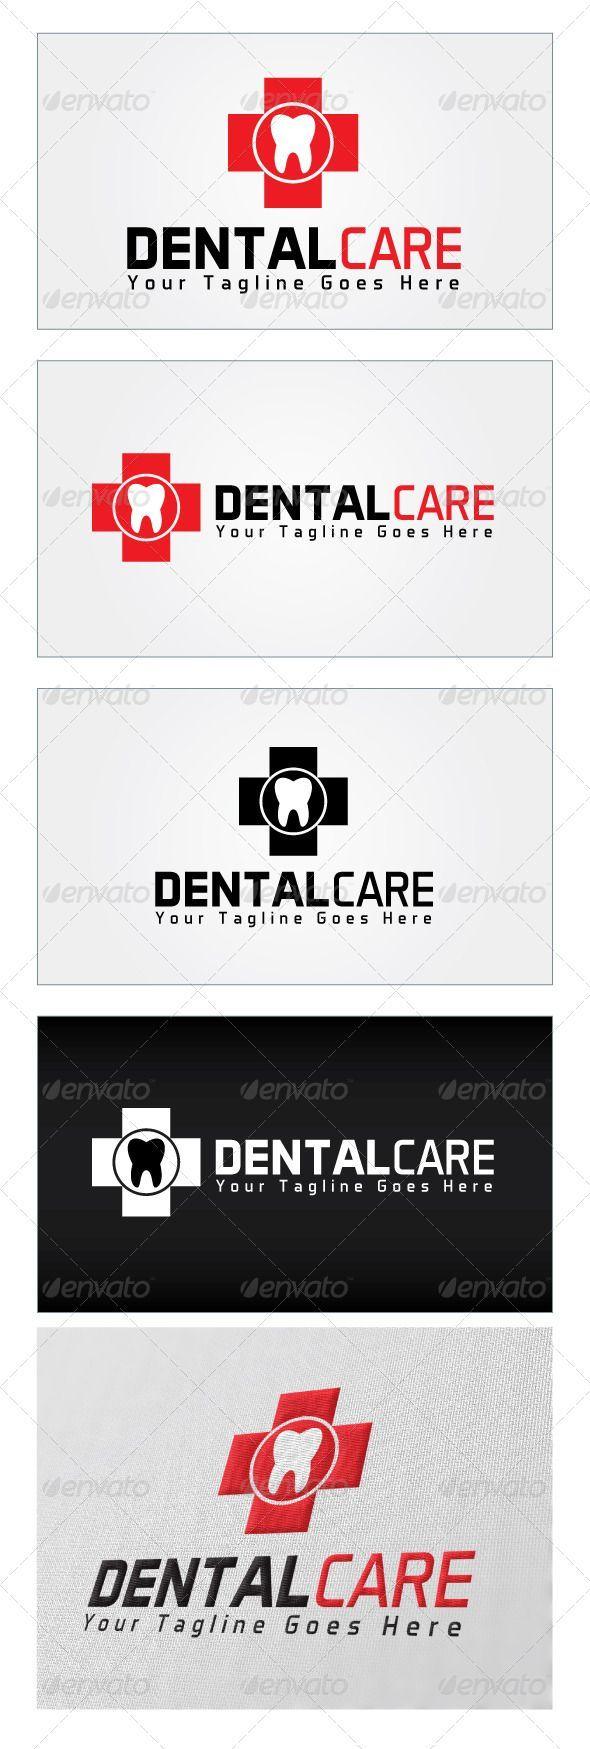 Abstract Cross Logo - Dental Care Logo Template | Dental care, Logo templates and Template